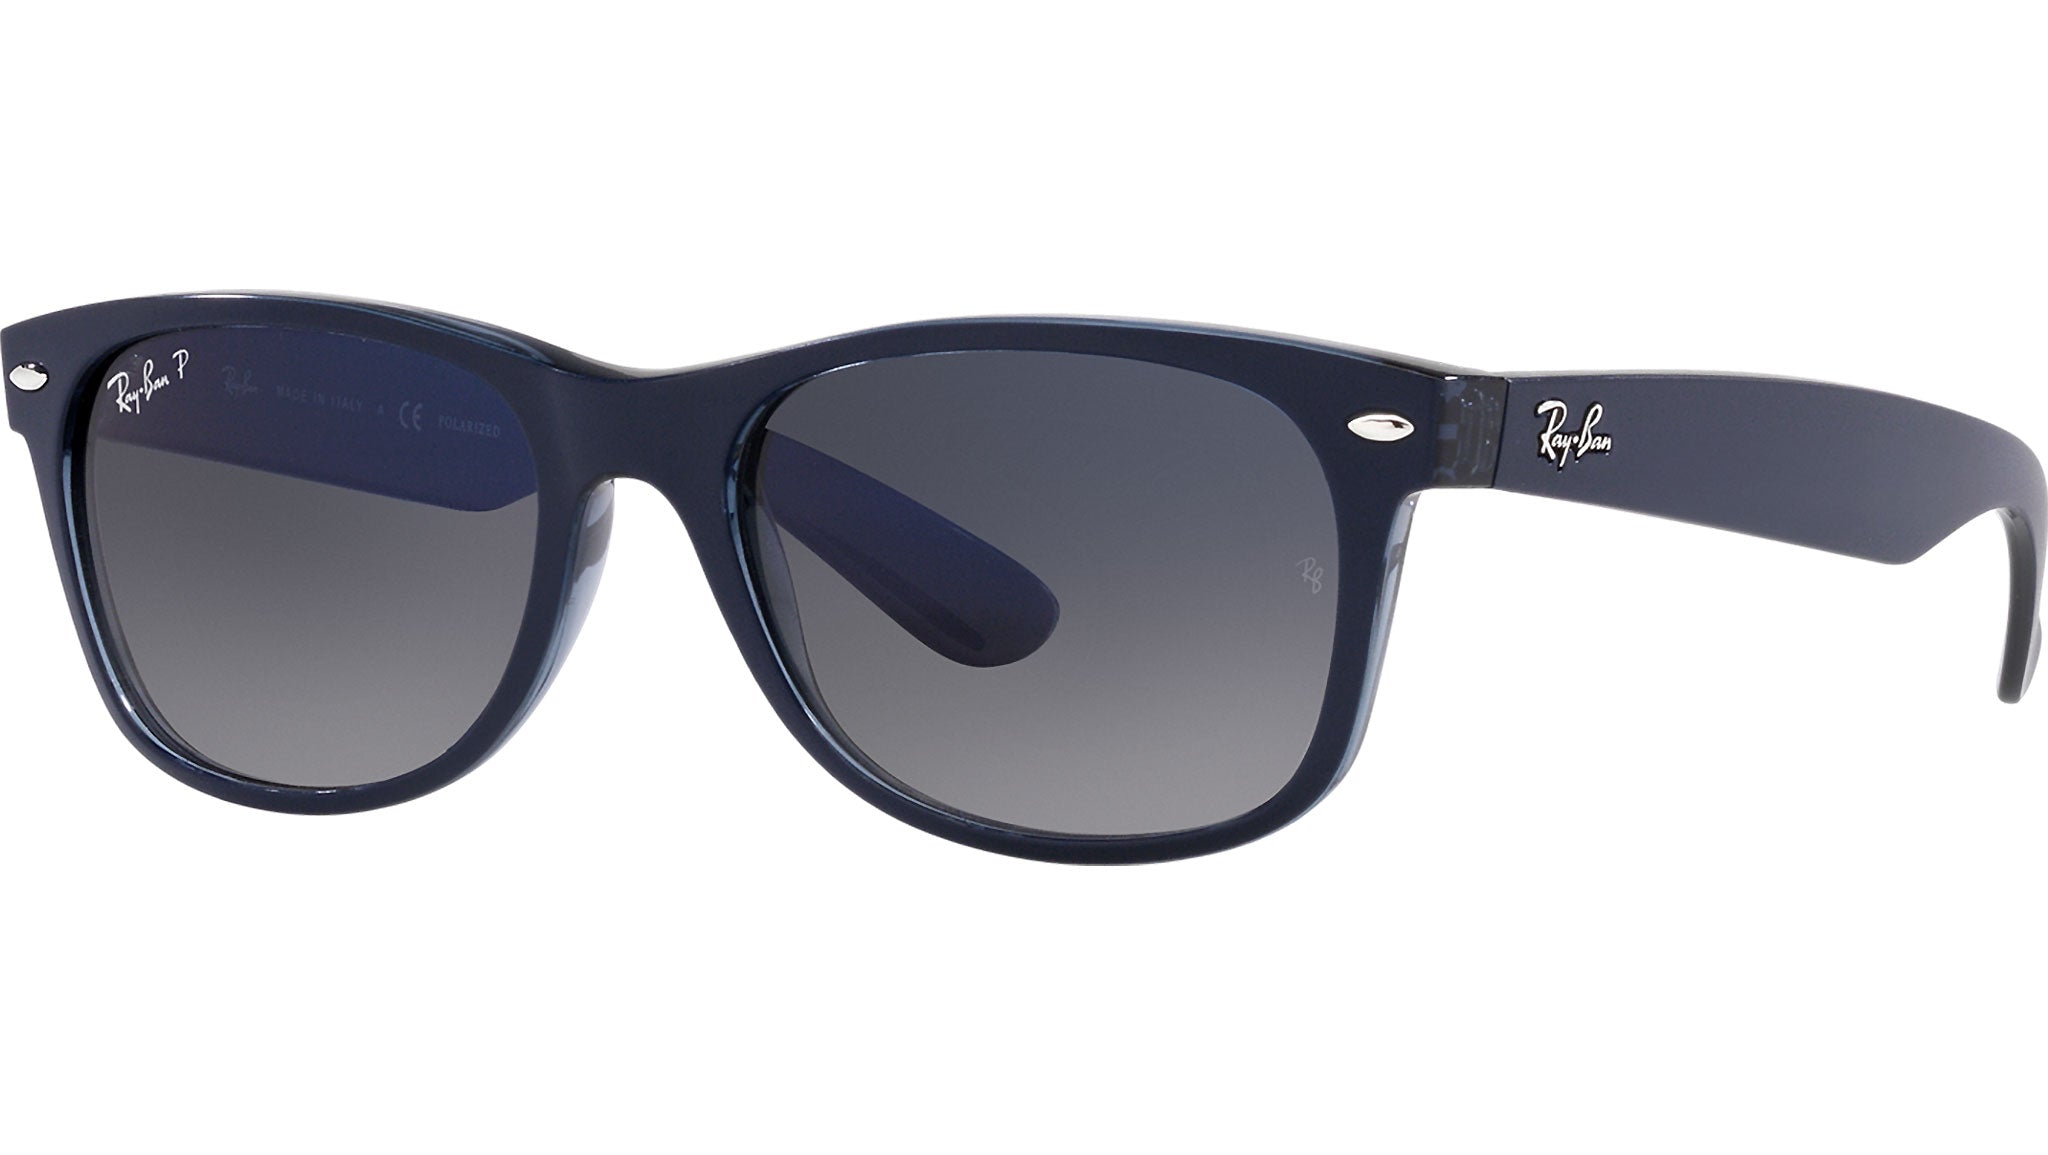 Ray-Ban Wayfarer Blue Sunglasses